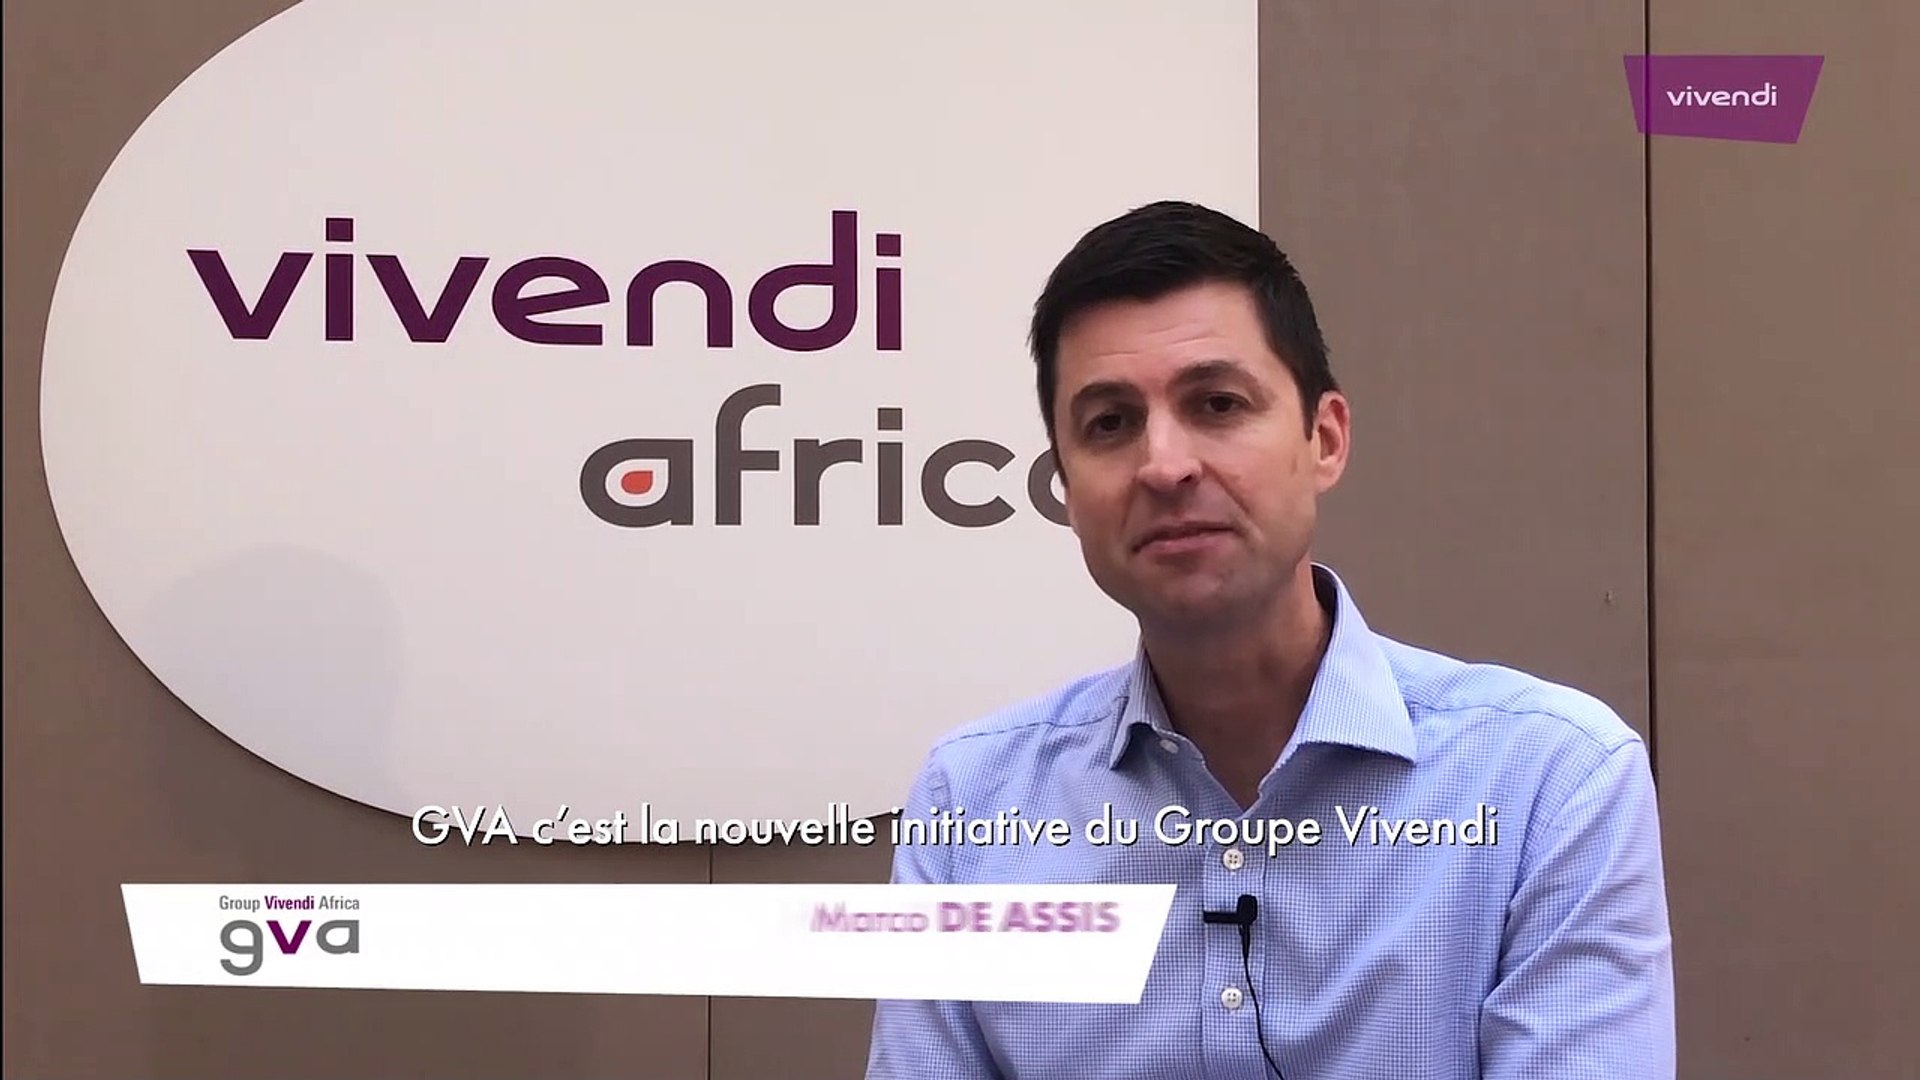 Interview de Marco de Assis, CEO de Group Vivendi Africa (GVA) – Vidéo Dailymotion